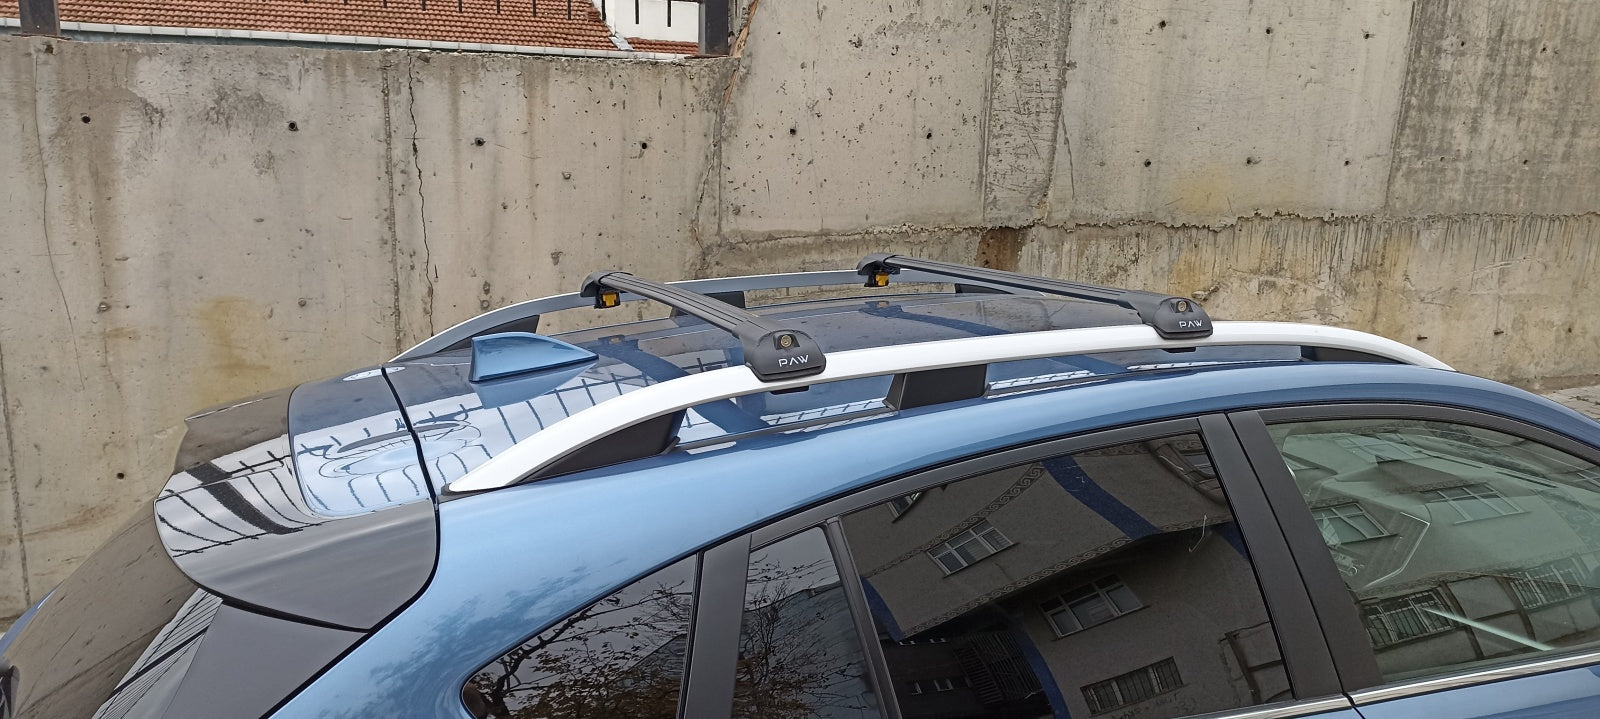 For Dacia Sandero Stepway 2013-Up Roof Rack System, Aluminium Cross Bar, Metal Bracket, Lockable, Black-5